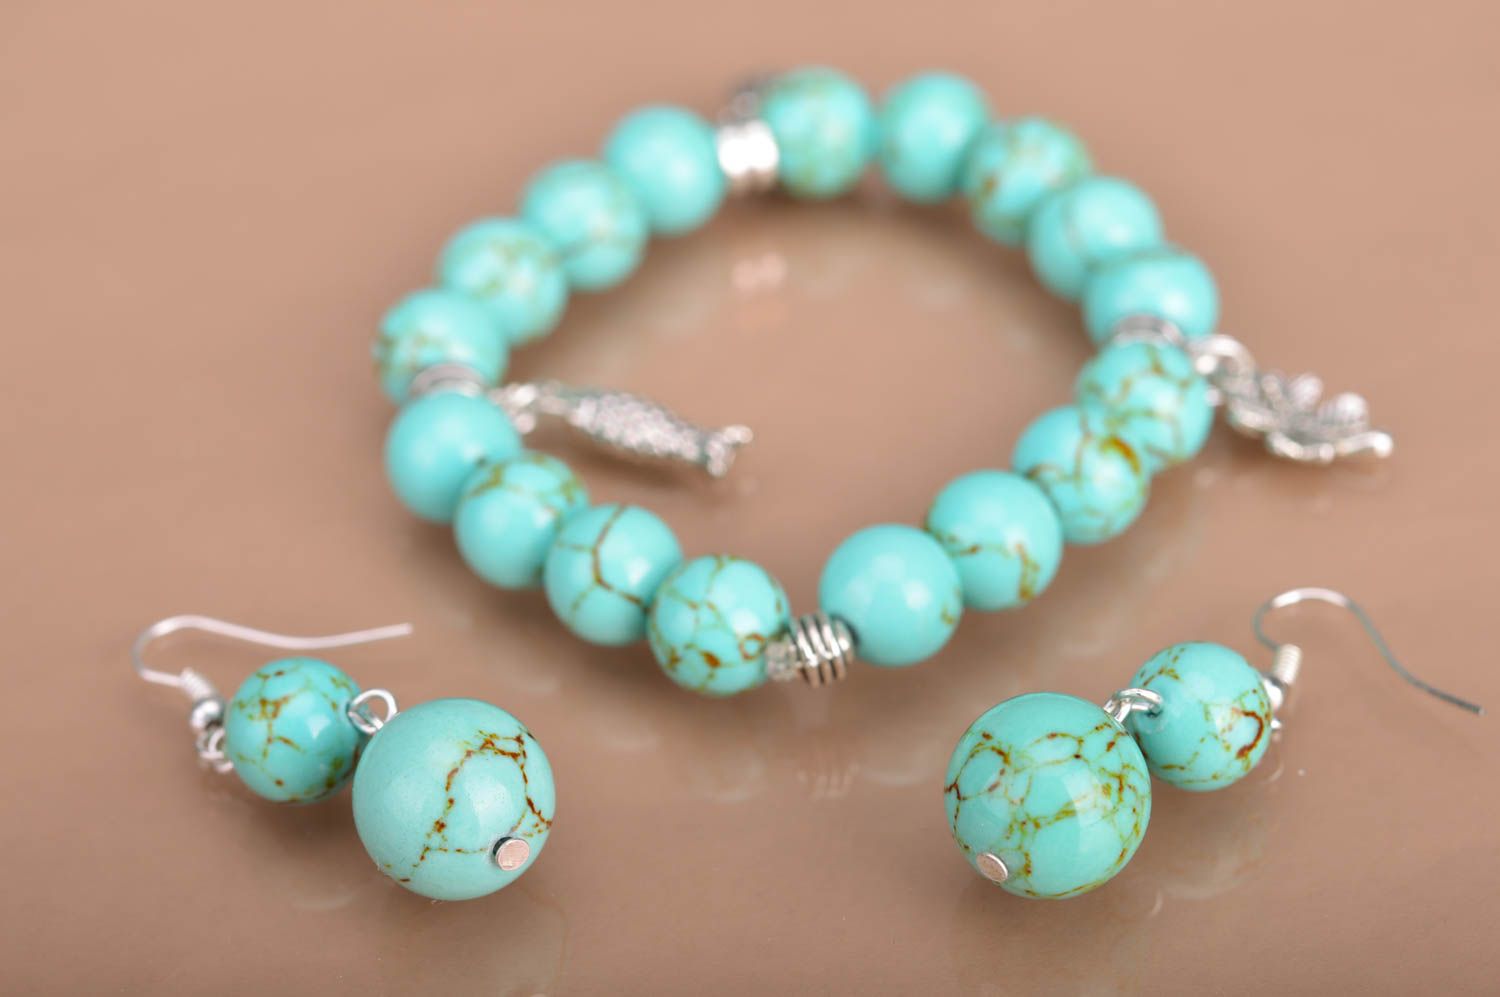 Handmade turquoise beaded jewelry set wrist bracelet with charms and earrings photo 5